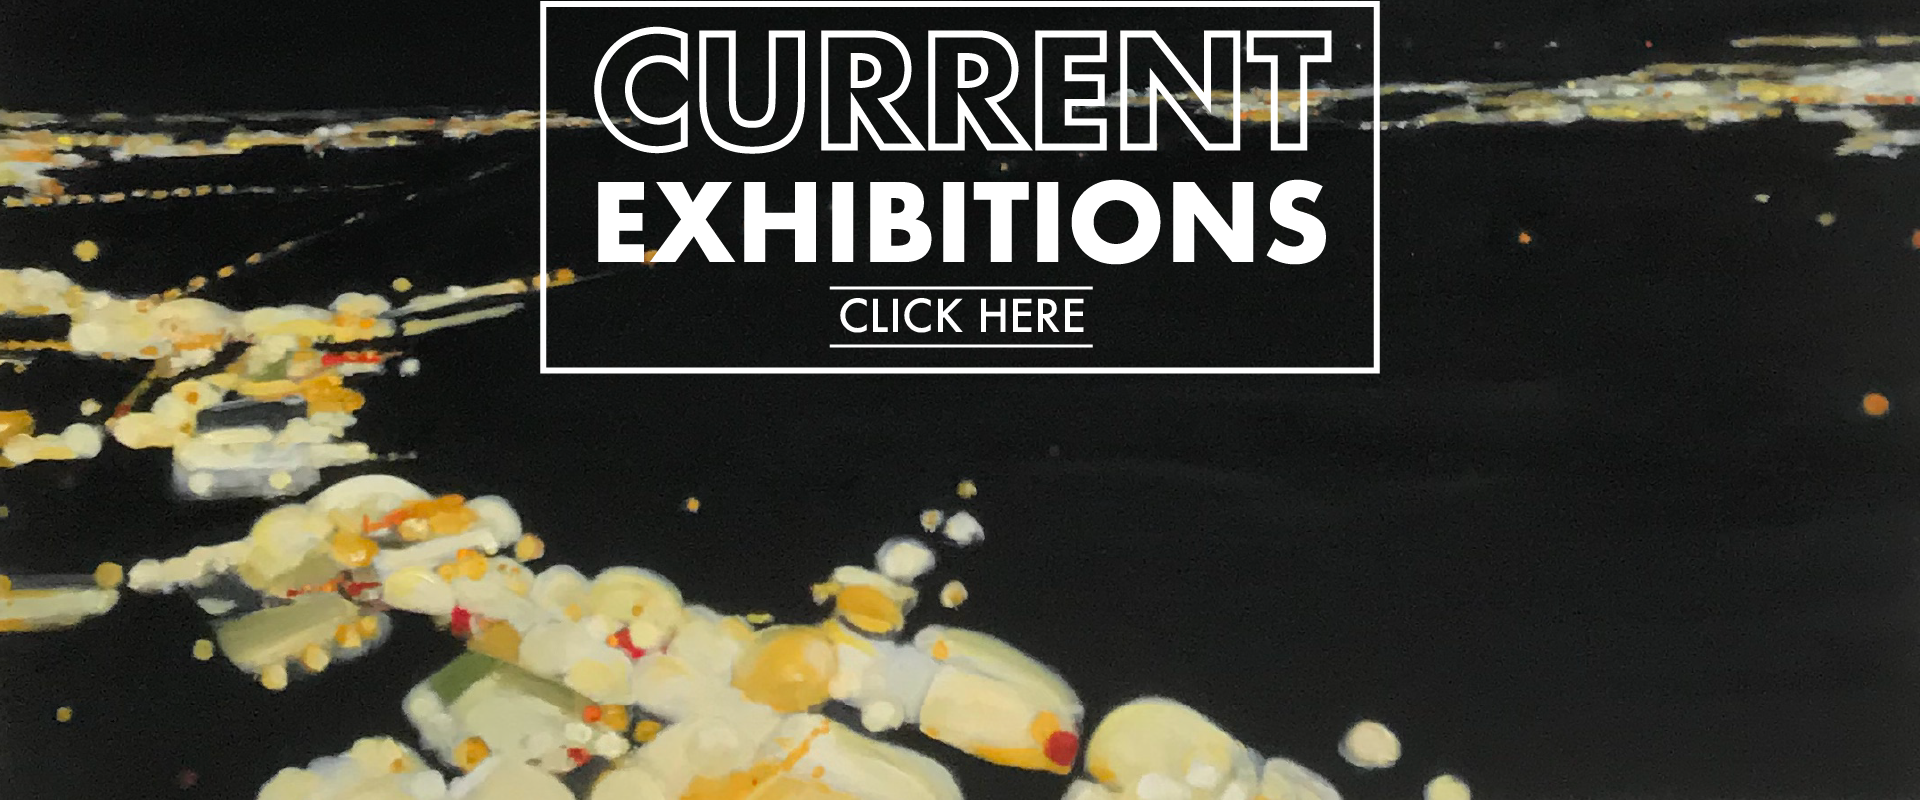 current exhibitions 